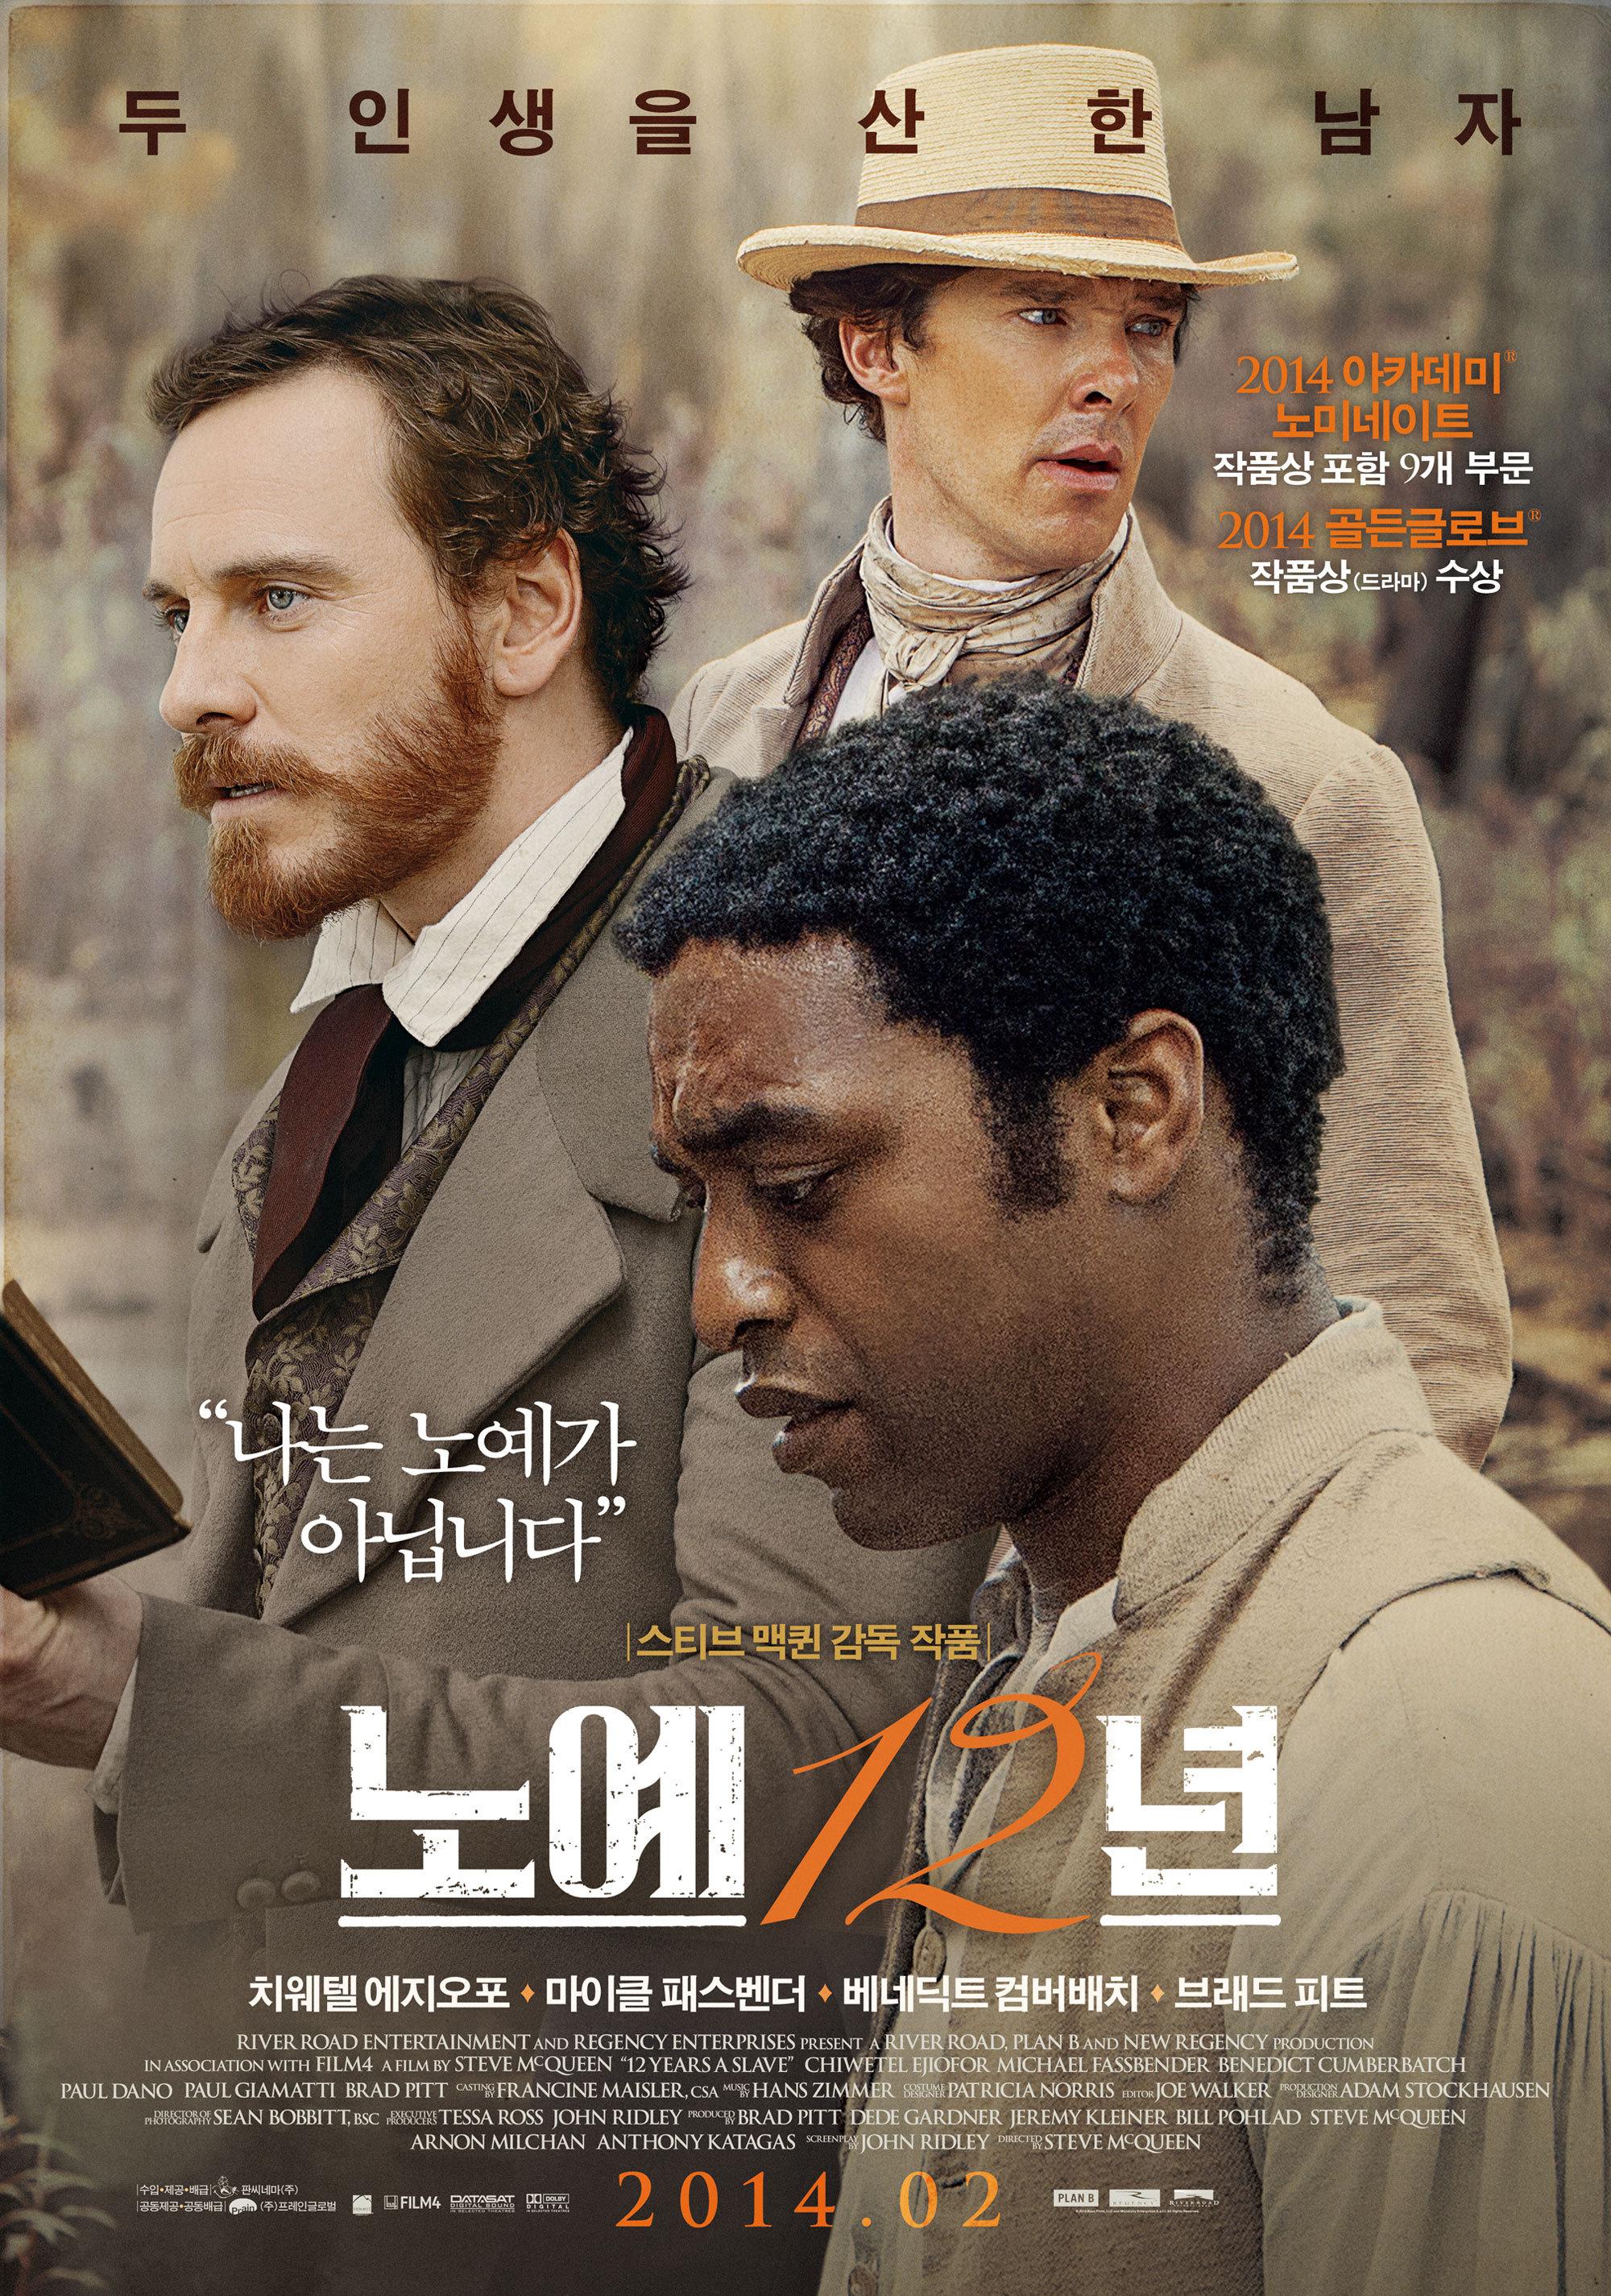 Постер фильма 12 лет рабства | 12 Years a Slave